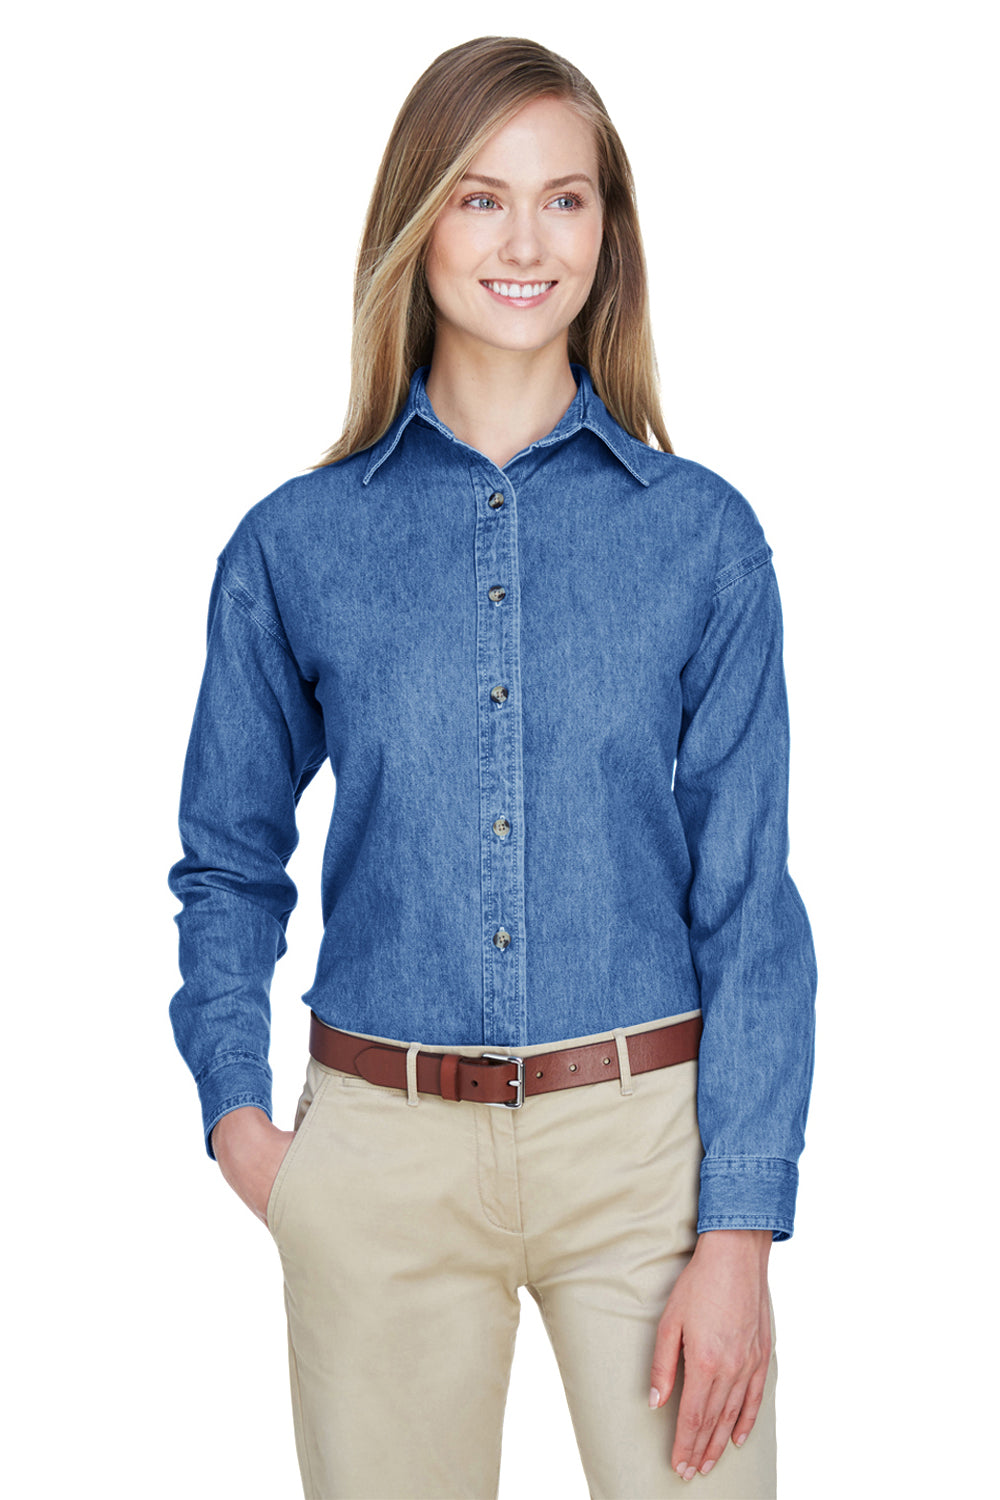 UltraClub 8966 Womens Cypress Denim Long Sleeve Button Down Shirt Indigo Blue Front